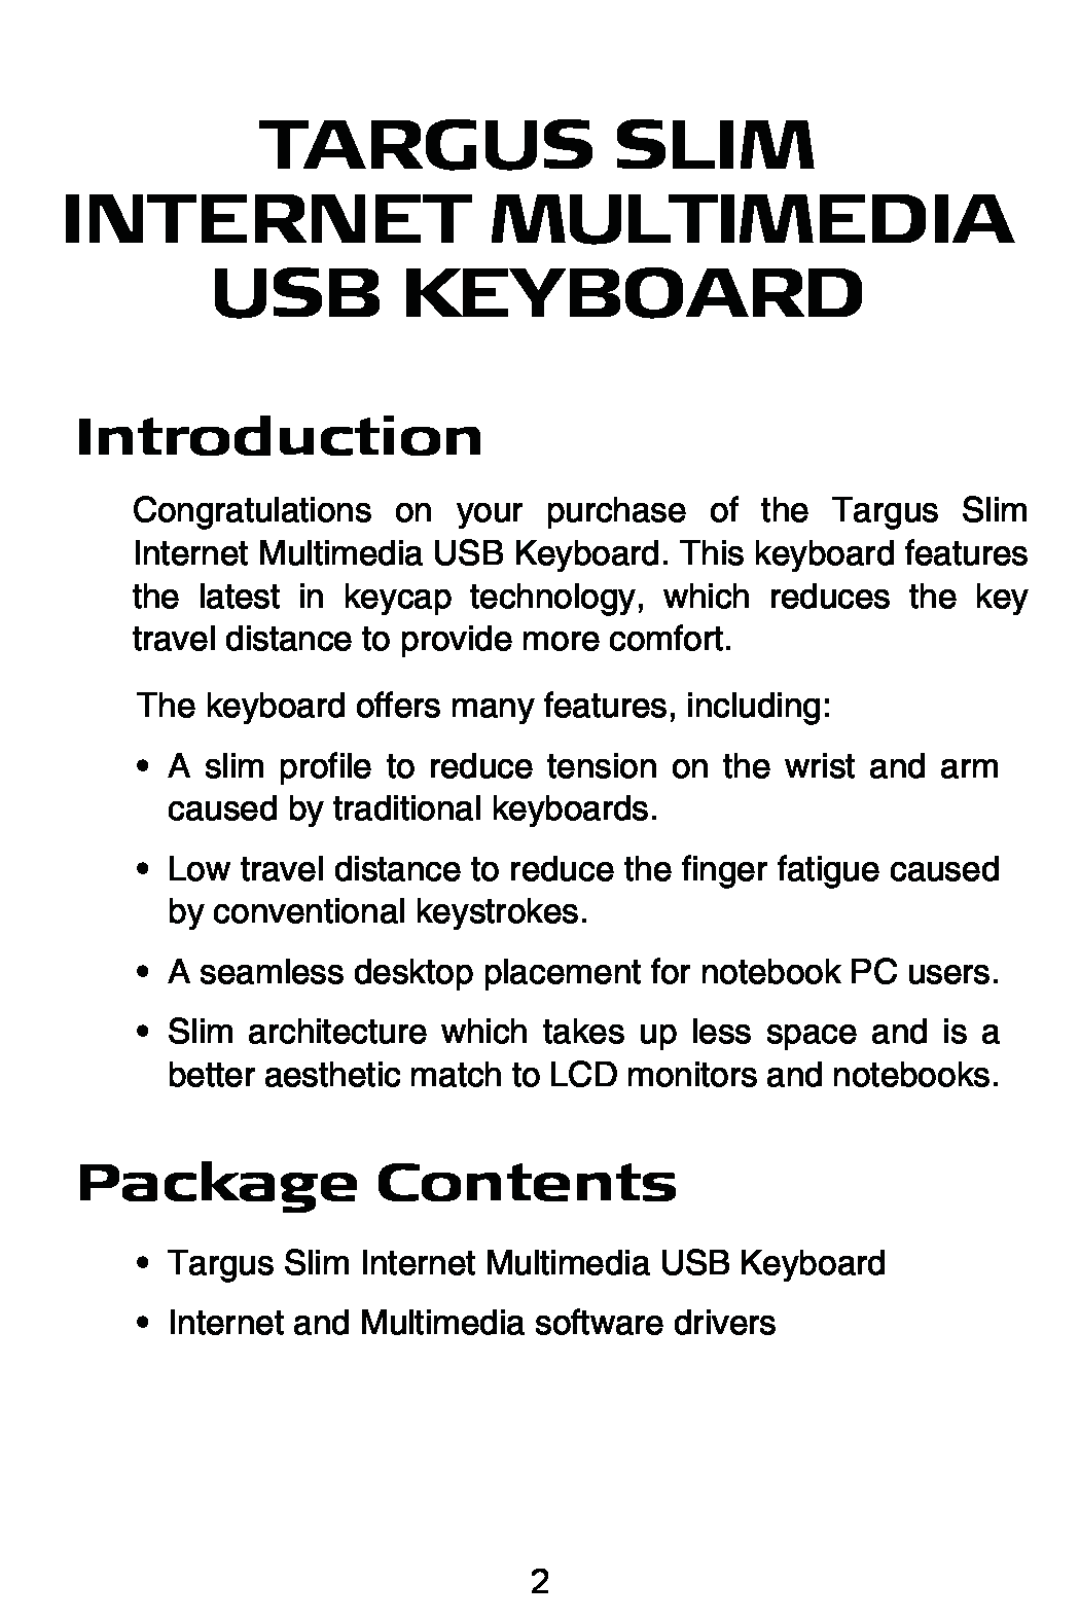 Targus internet multimedia USB keyboard Introduction, Package Contents, Targus Slim Internet Multimedia Usb Keyboard 